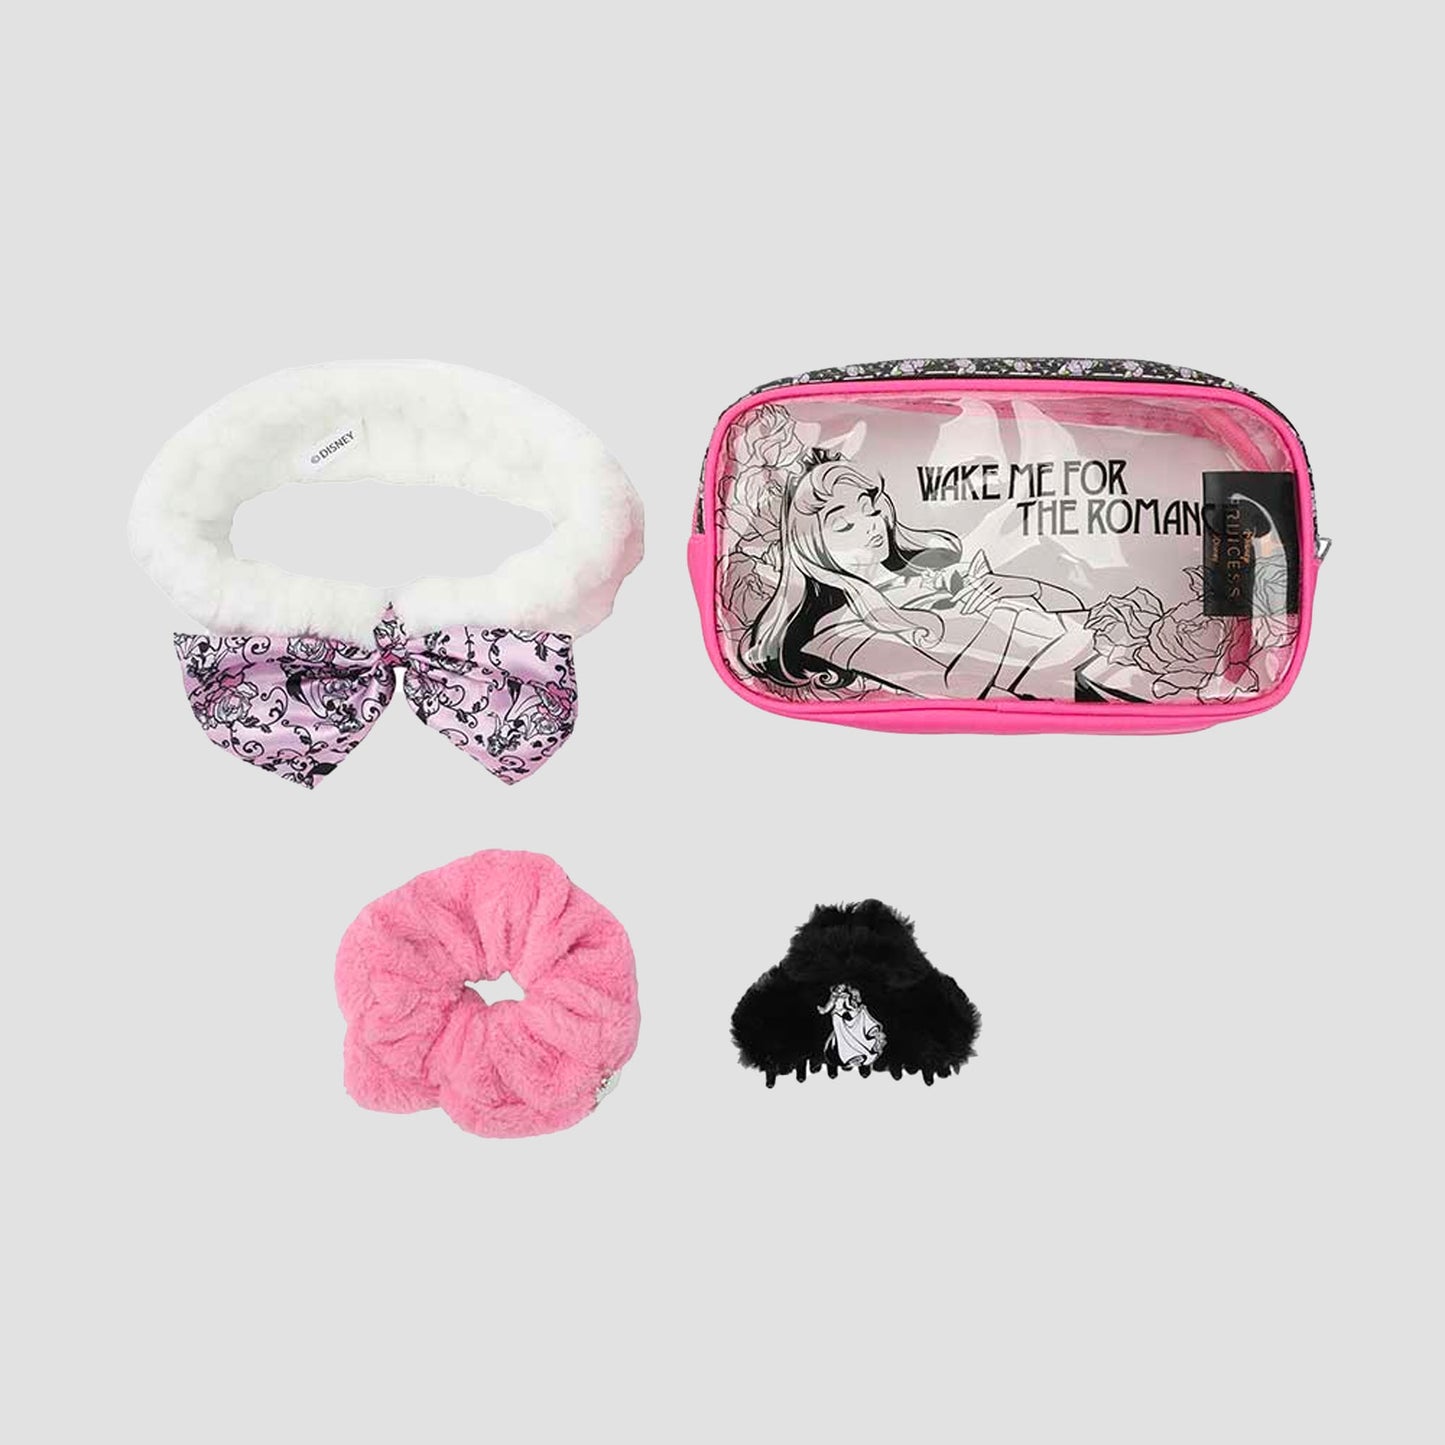 Sleeping Beauty "Treat Yourself" Disney Princess Hair Accessory Kit